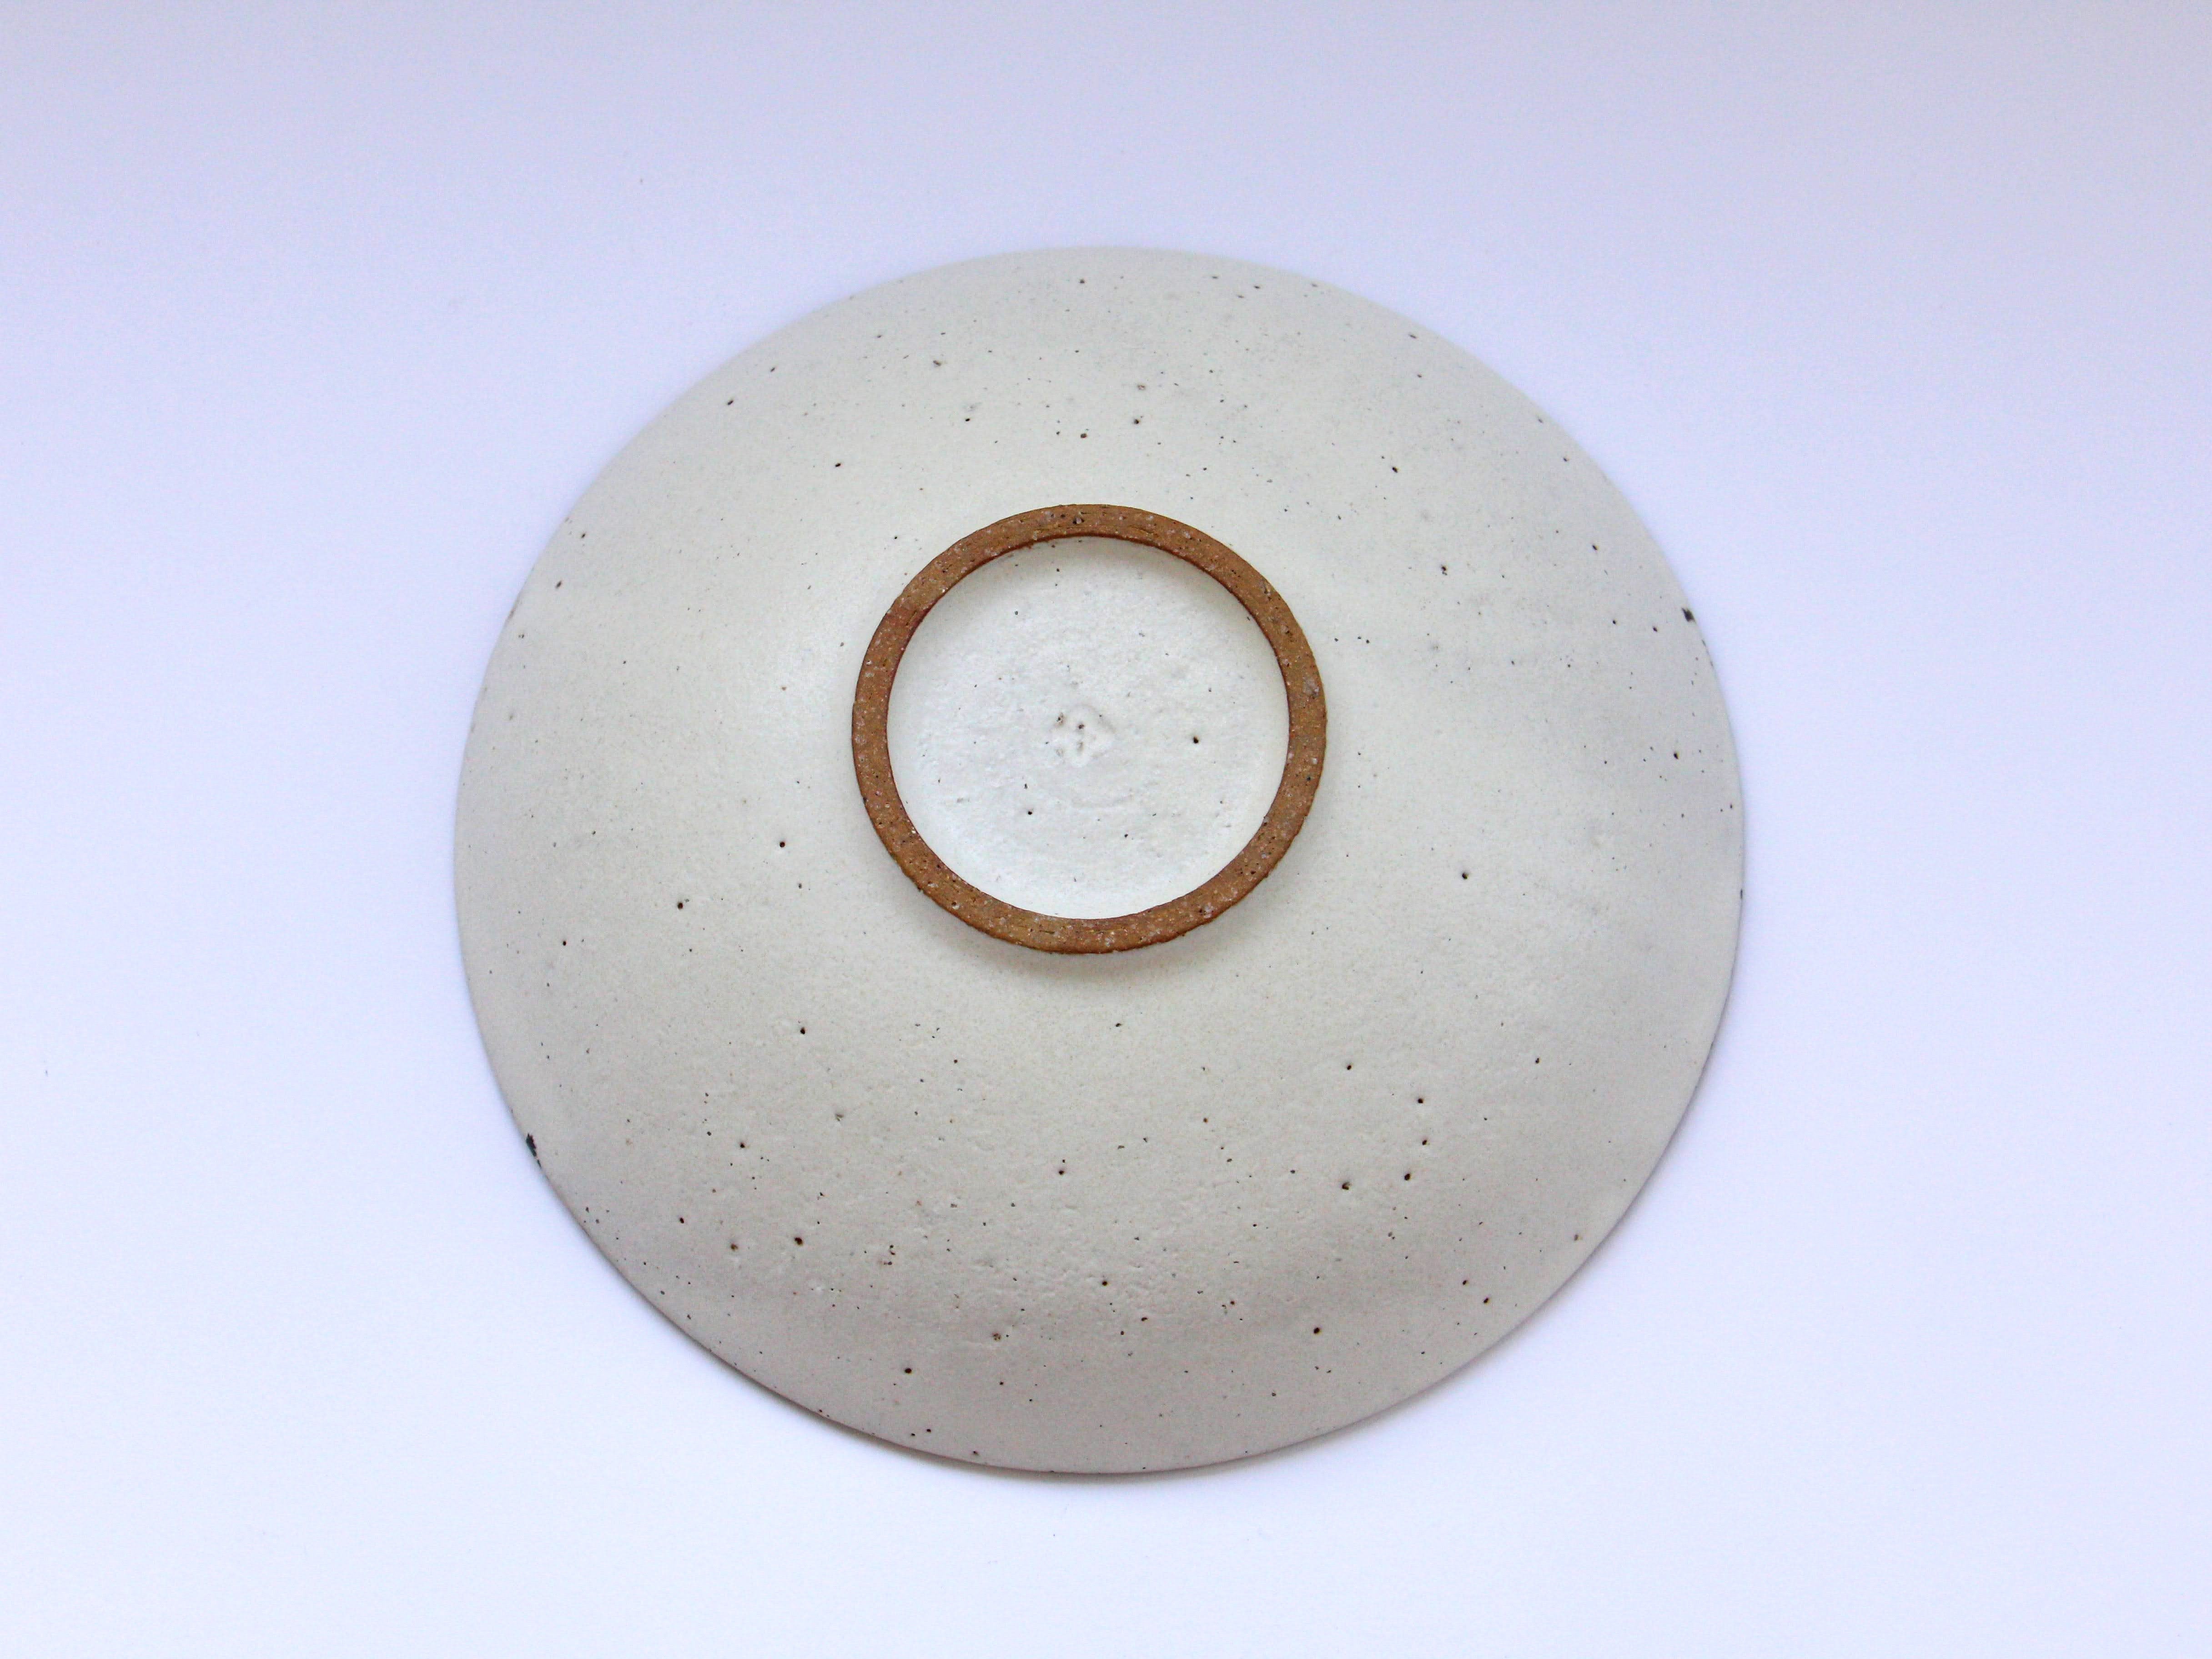 White clay 7-inch shallow bowl [Bunzan Kanae]